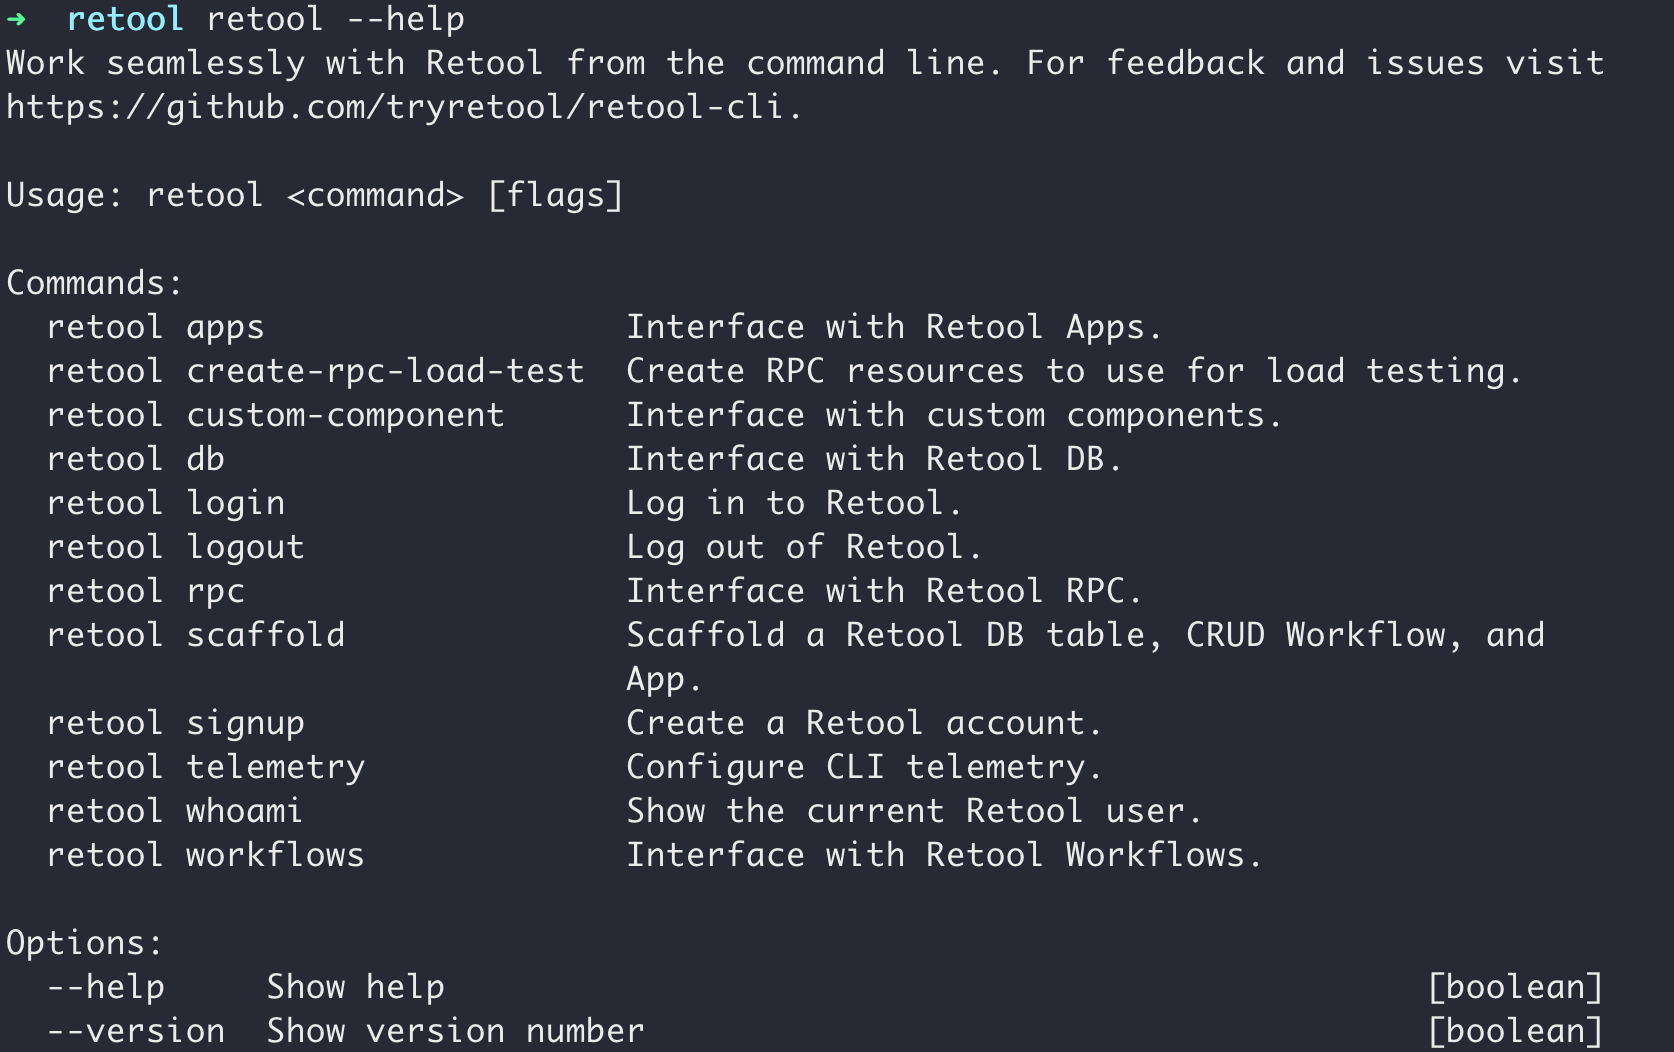 Screenshot of the retool help command